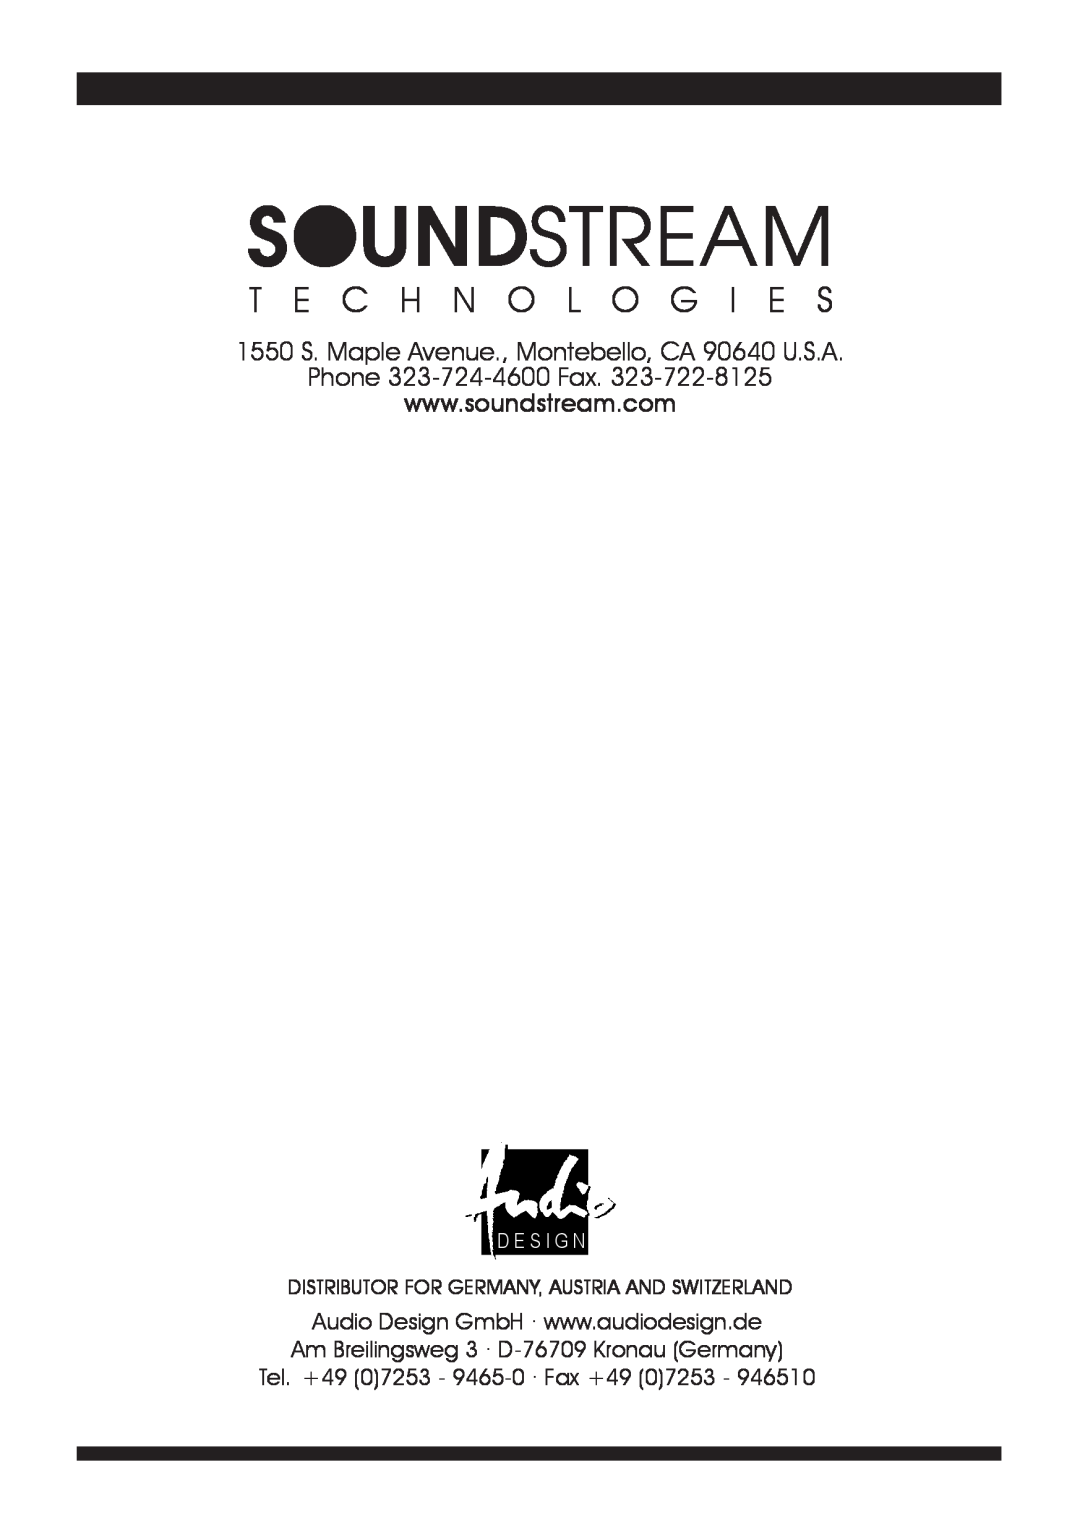 Soundstream Technologies LW2.240 T E C H N O L O G I E S, 1550 S. Maple Avenue., Montebello, CA 90640 U.S.A, D E S I G N 